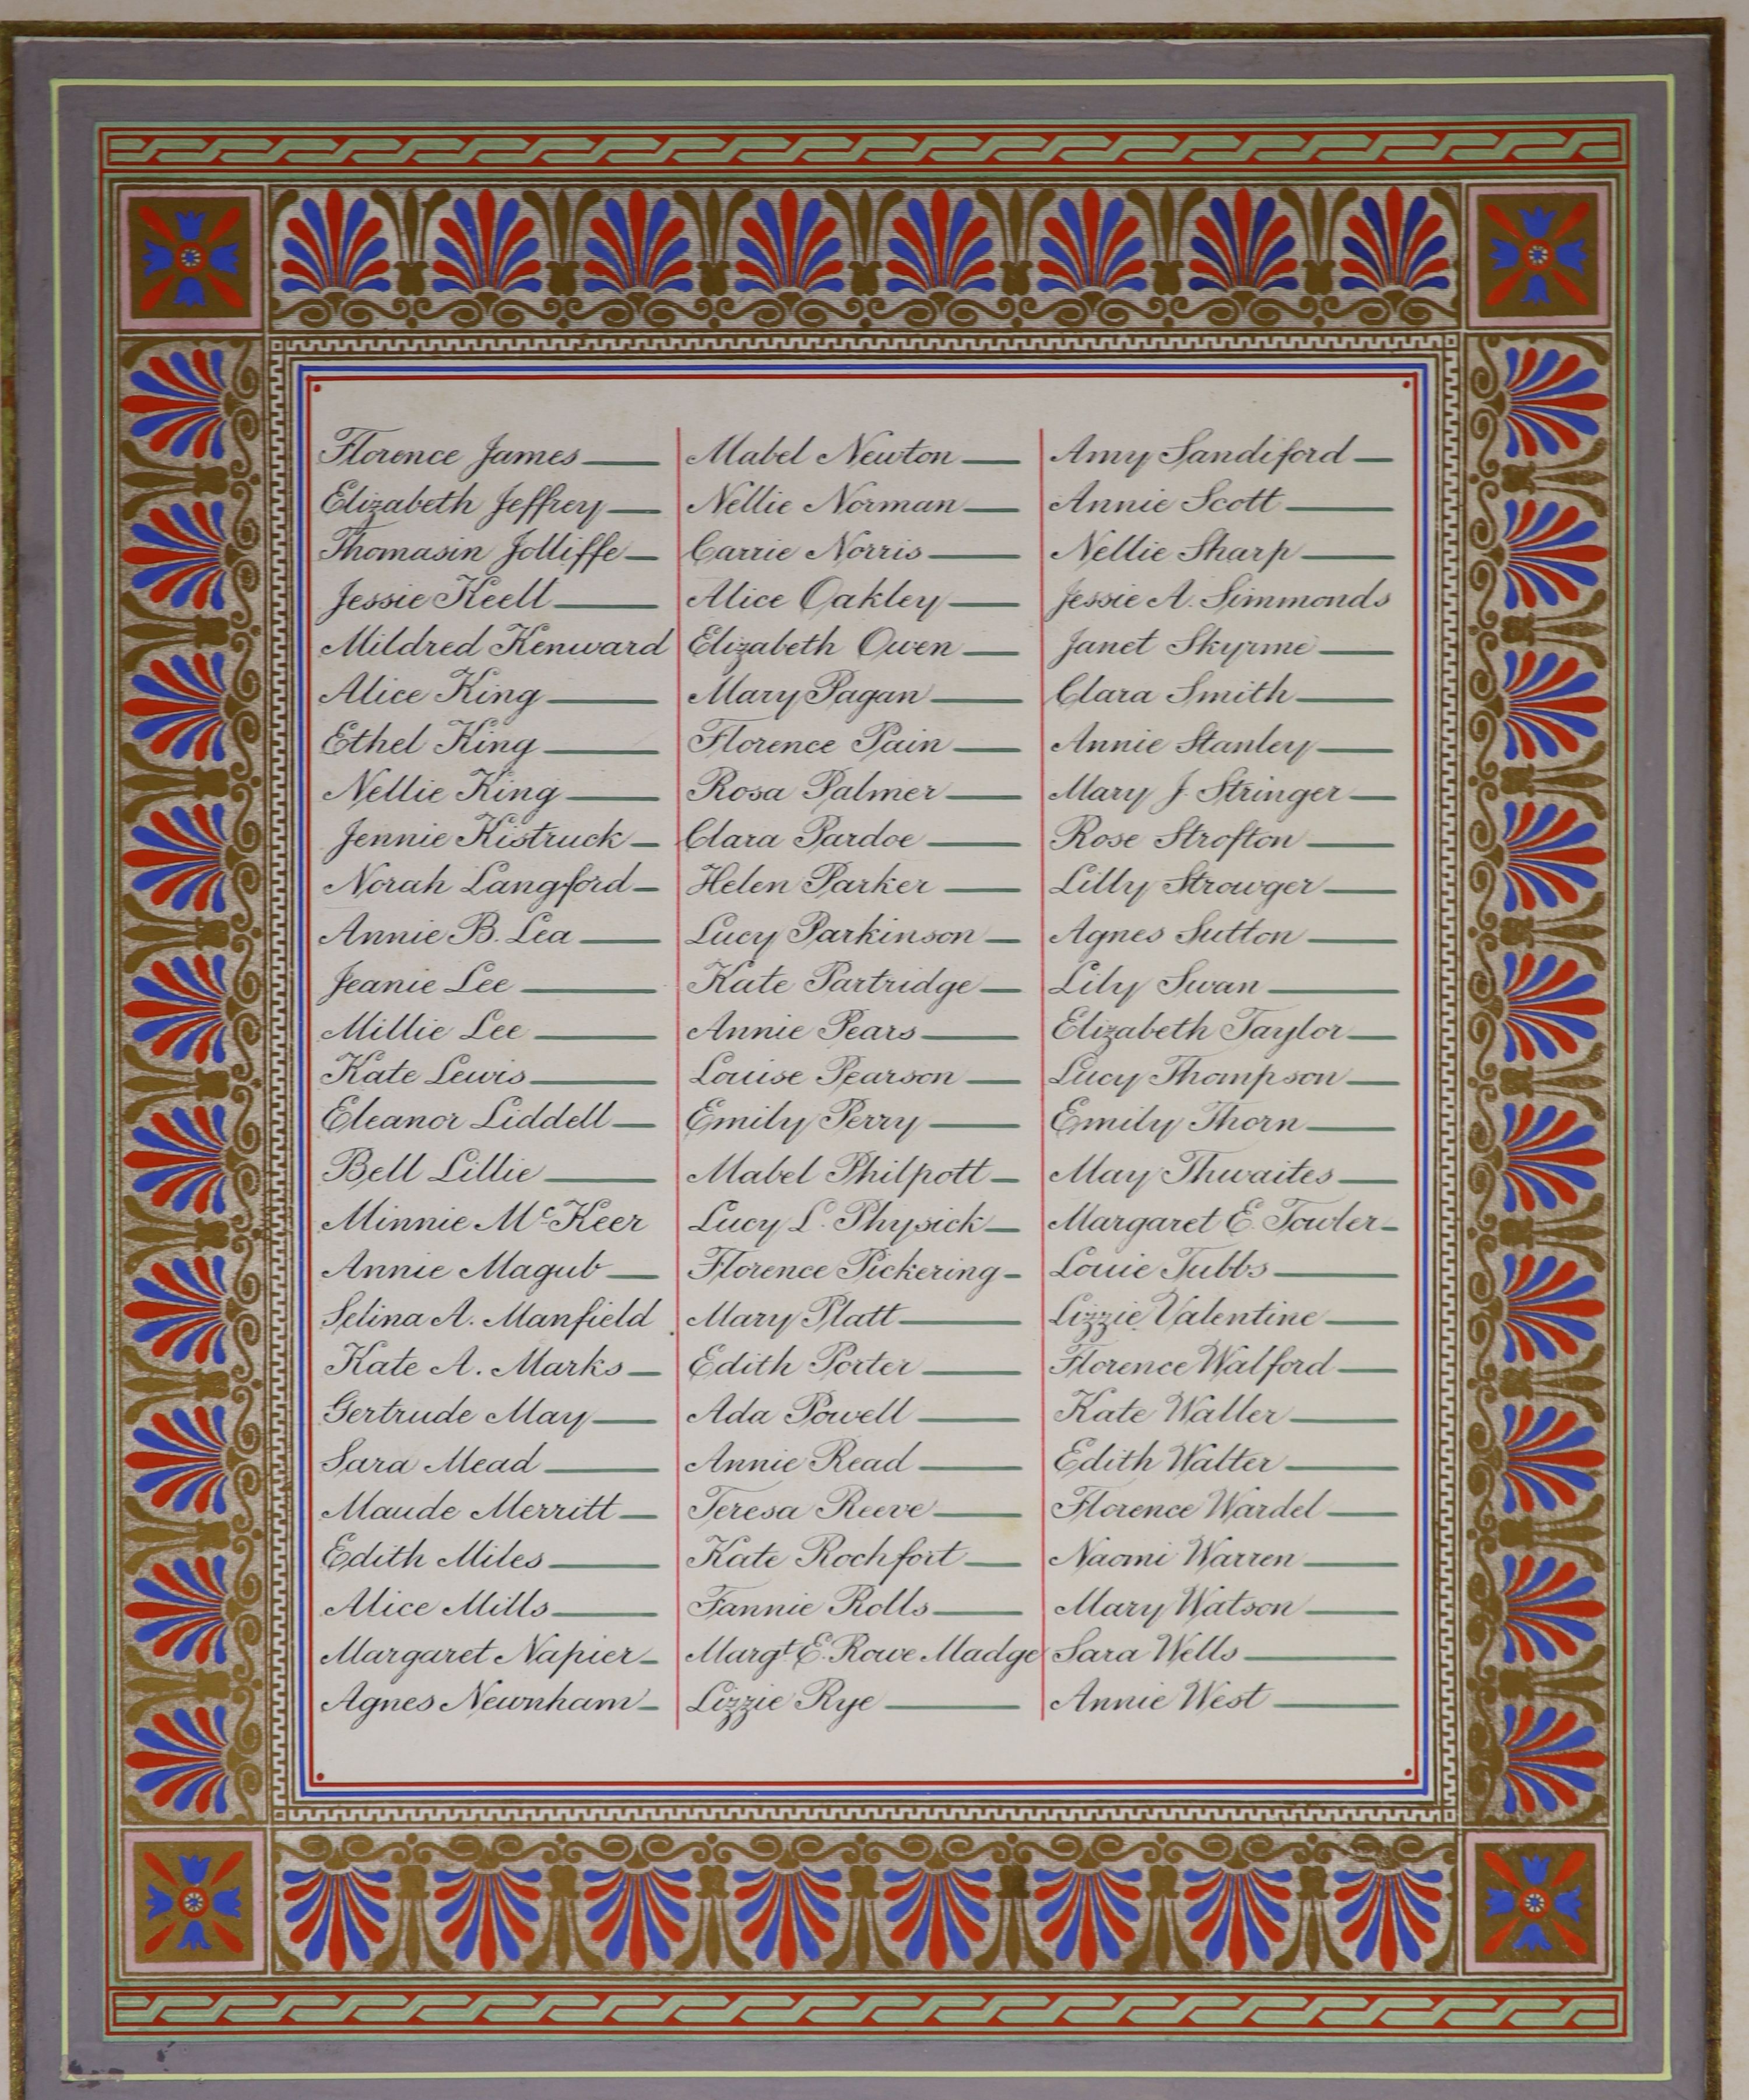 A fine Victorian illuminated calligraphic presentation ledger, 38 x 33cm